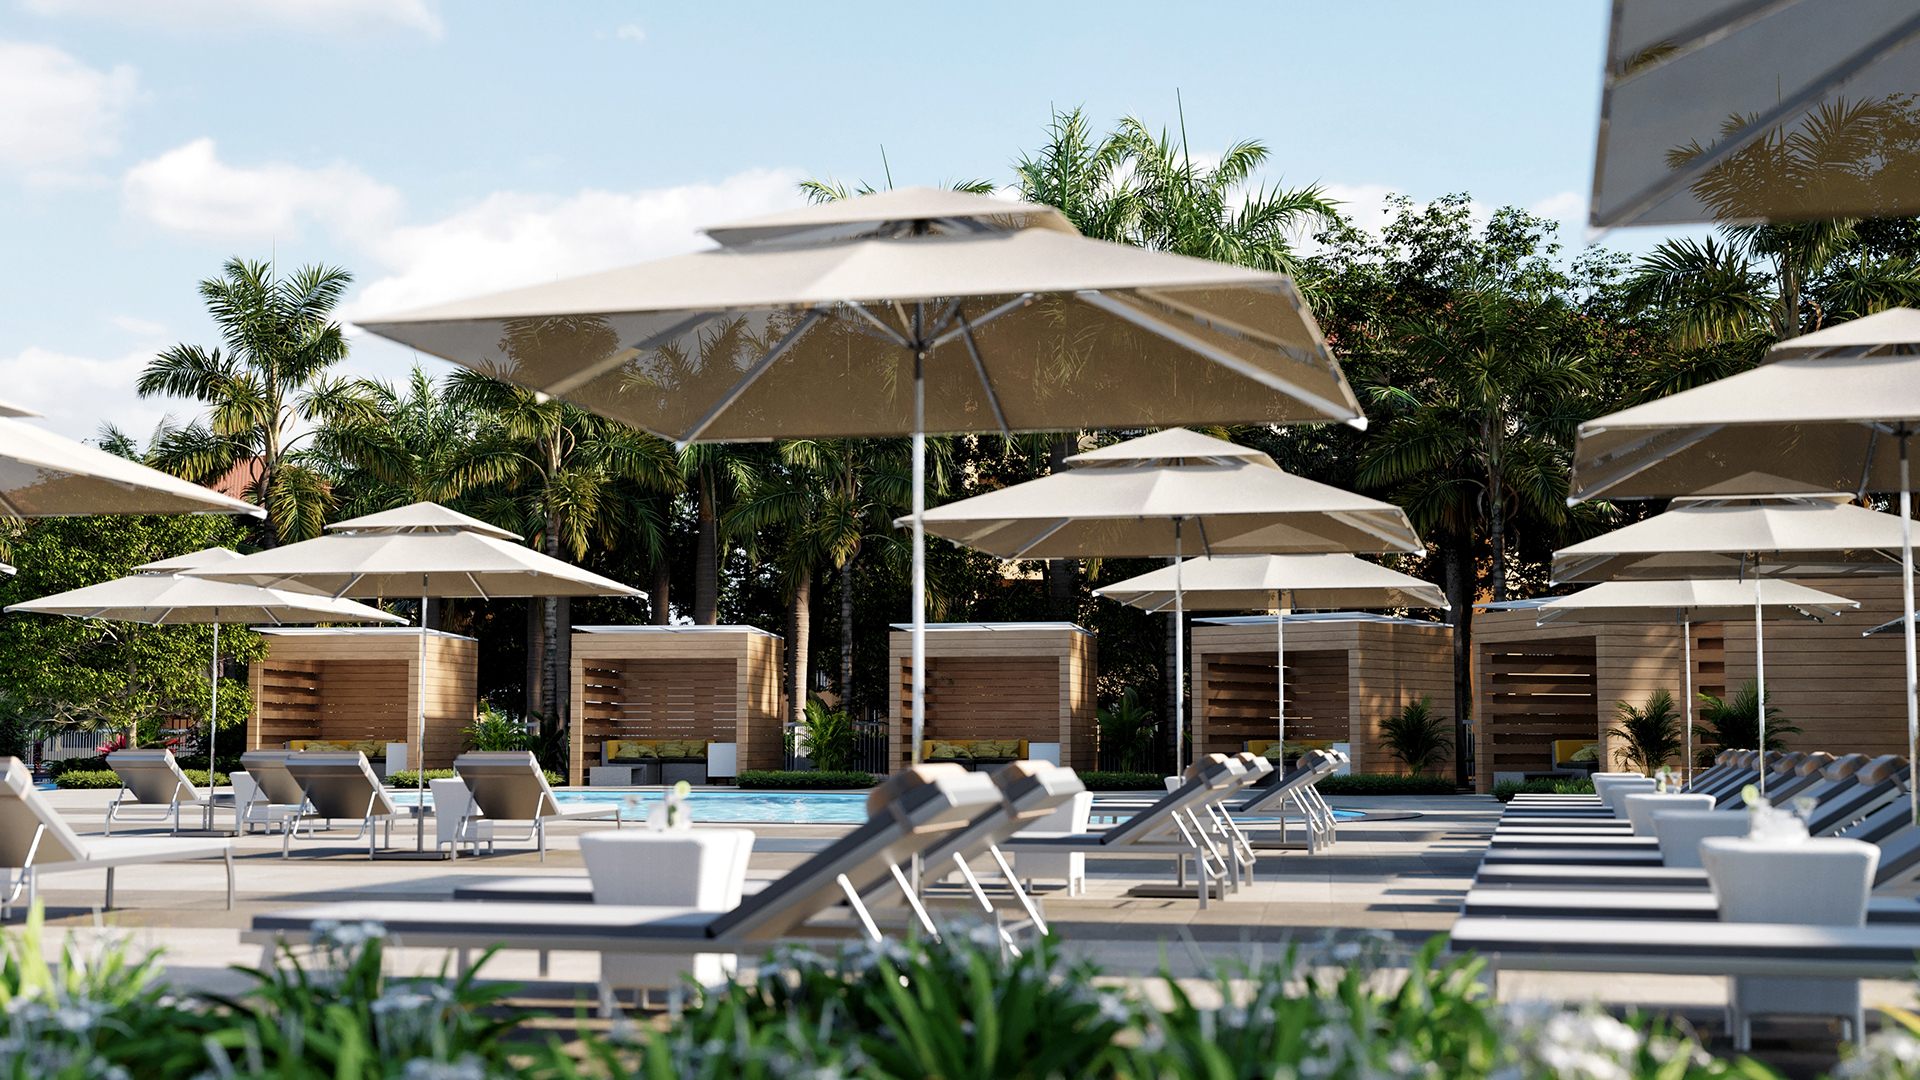 Vega Digital Awards Winner - New Additions at The Ritz-Carlton Golf Resort, Naples, 3DUS